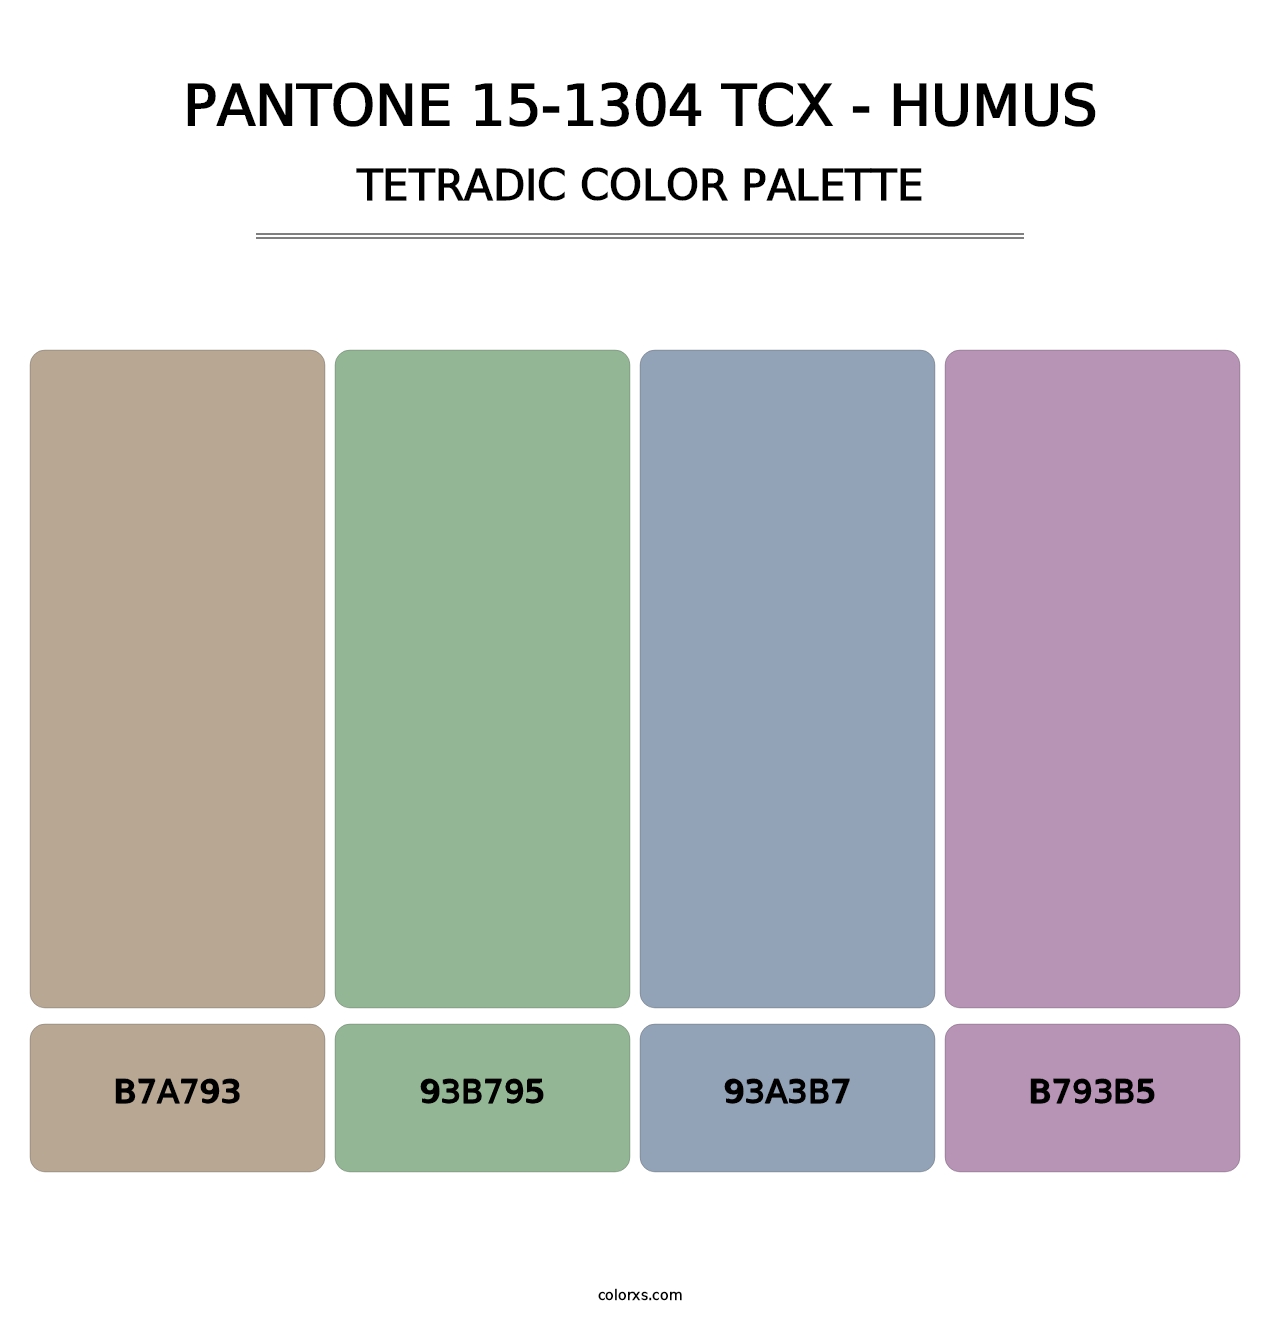 PANTONE 15-1304 TCX - Humus - Tetradic Color Palette